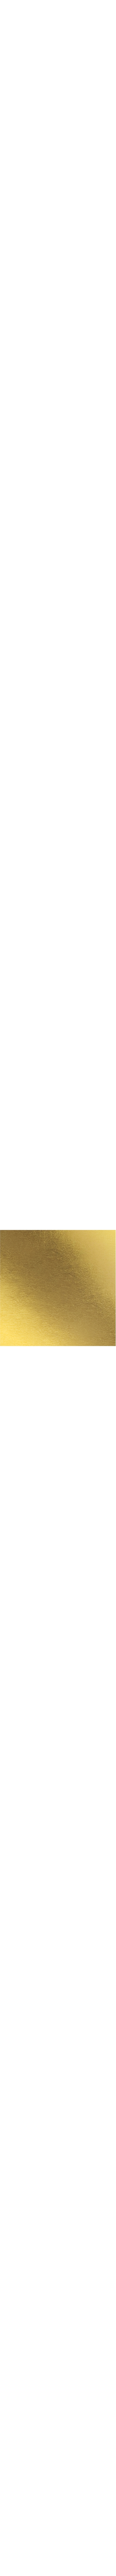 MT0020 Metal gold en 0.50m